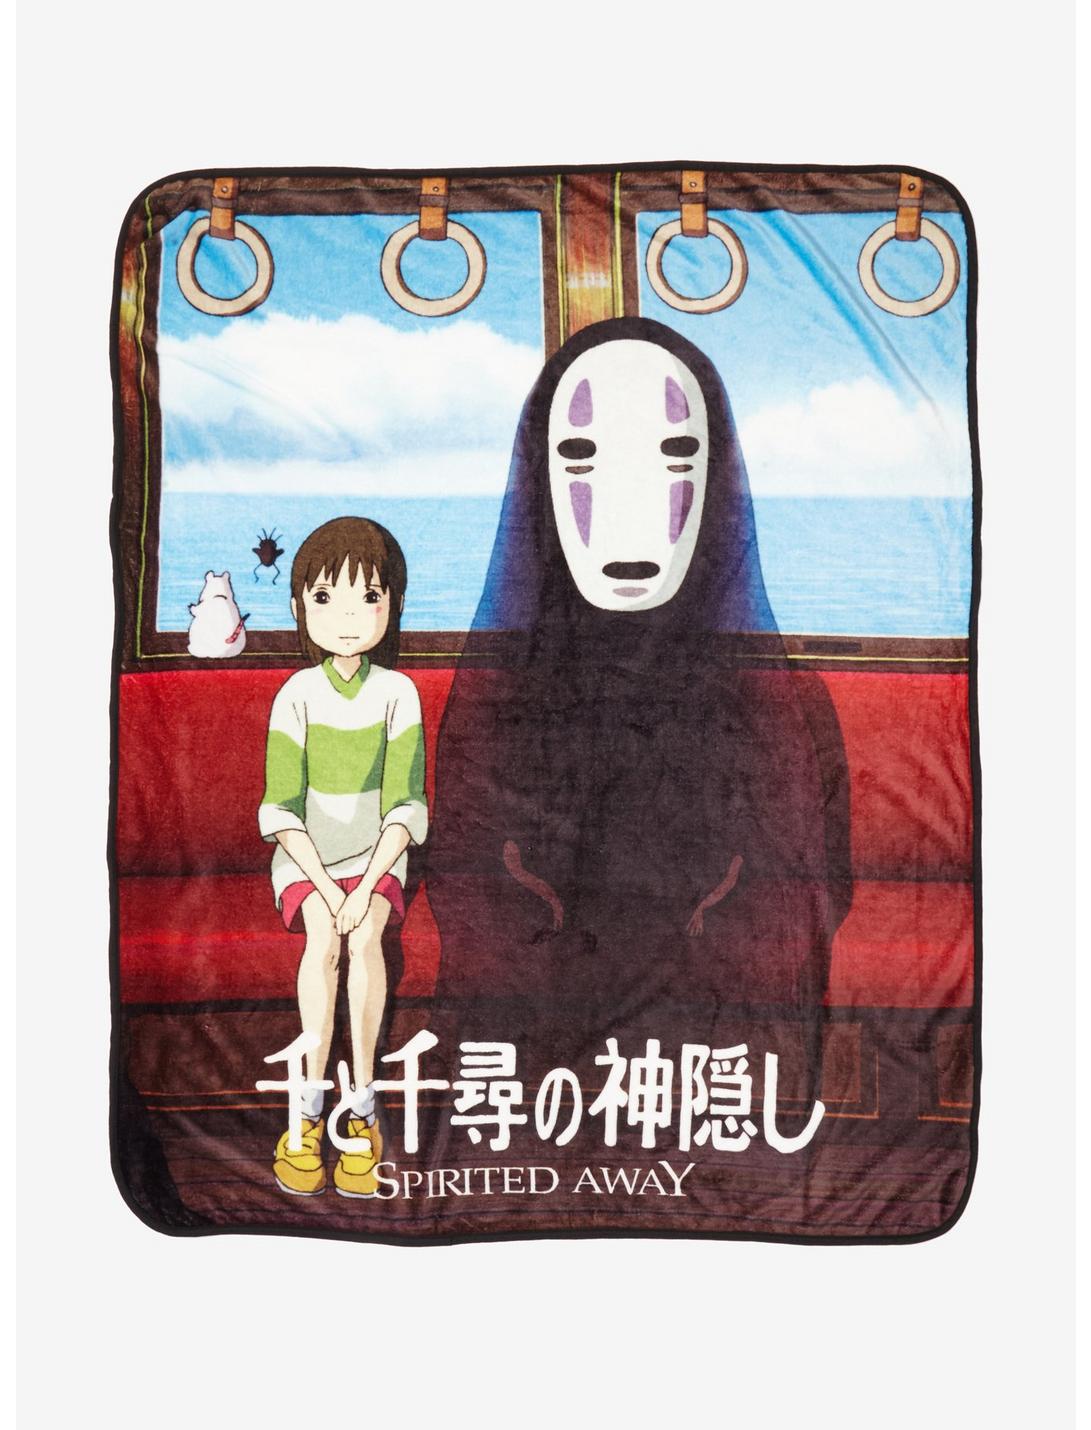 Studio Ghibli Spirited Away Train Scene Throw Blanket, , hi-res